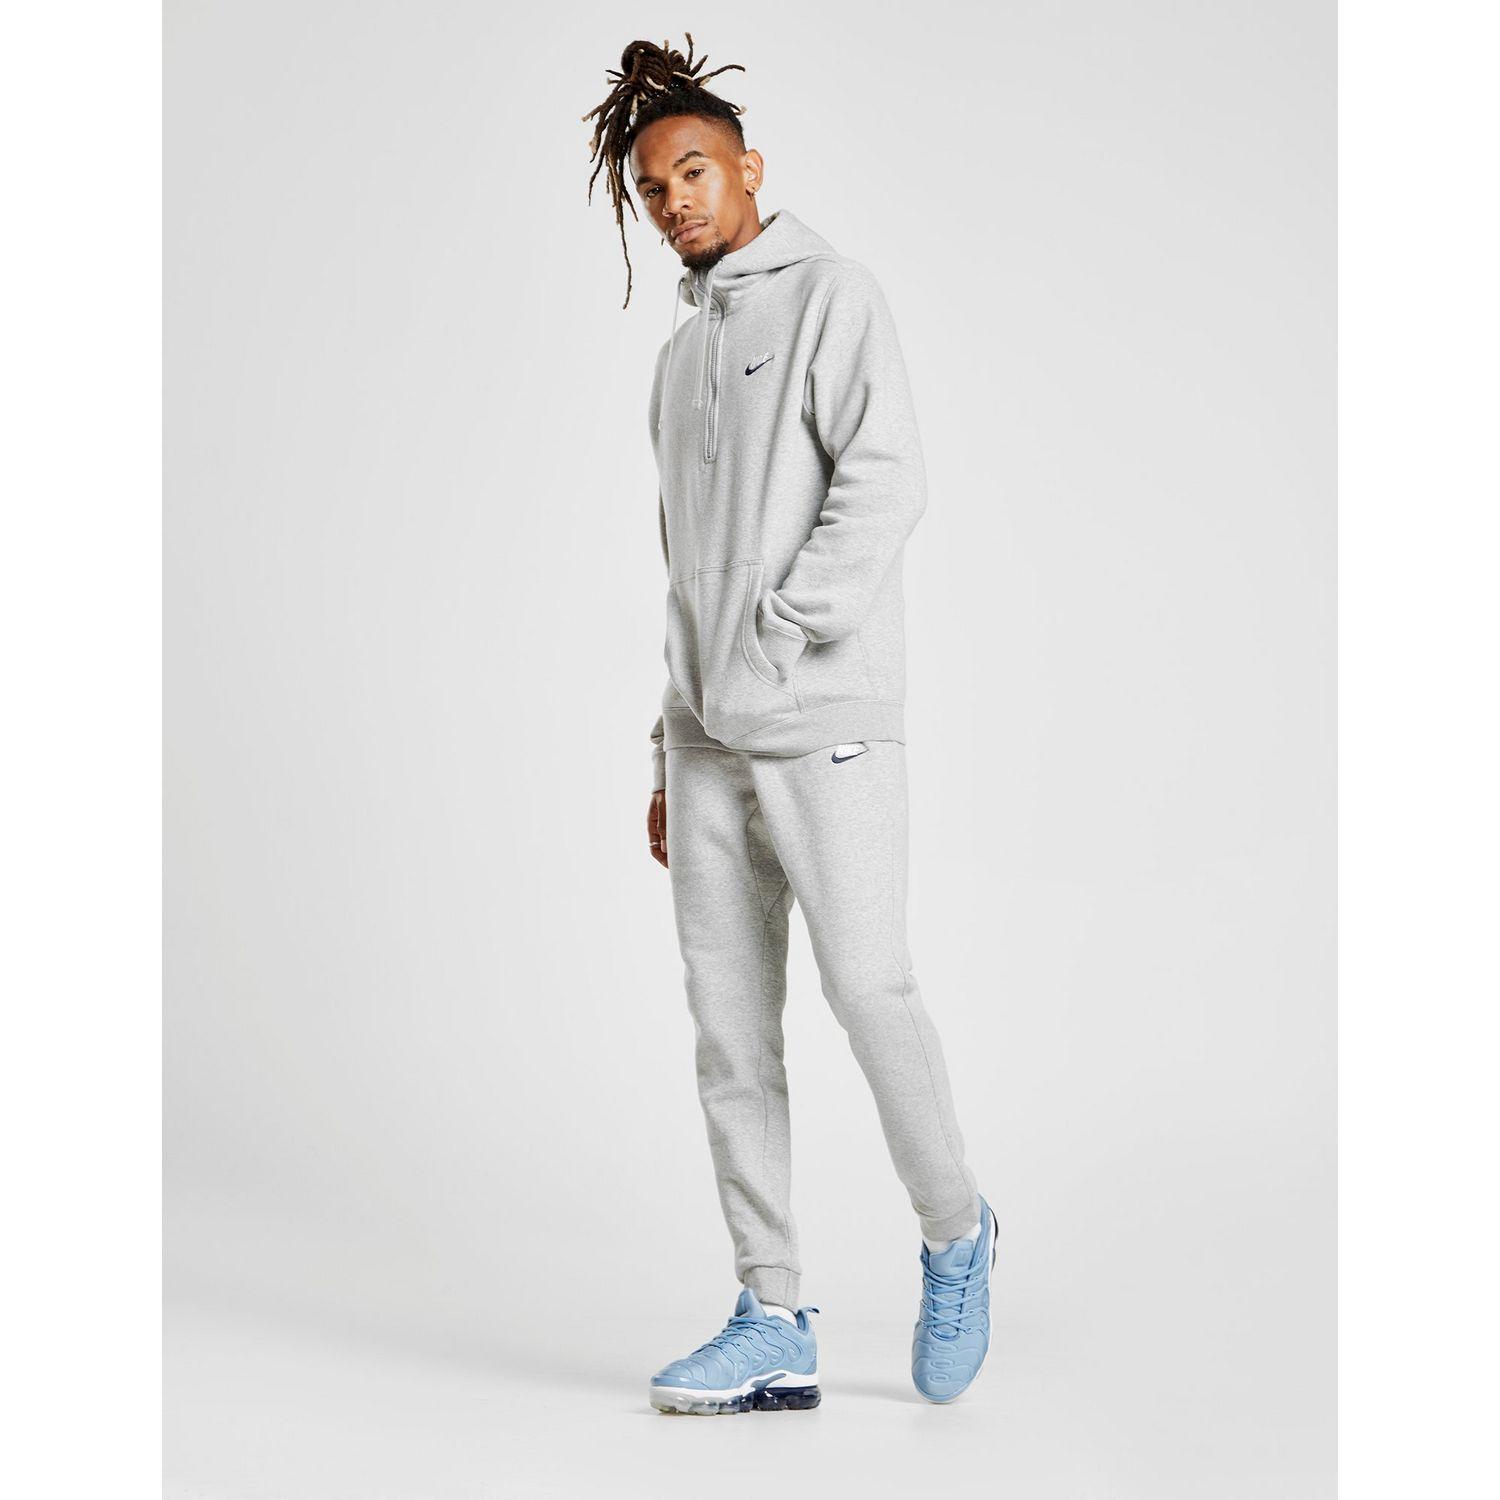 Nike Foundation Cuffed Fleece Joggers in Grey/Black (Gray) for Men - Lyst